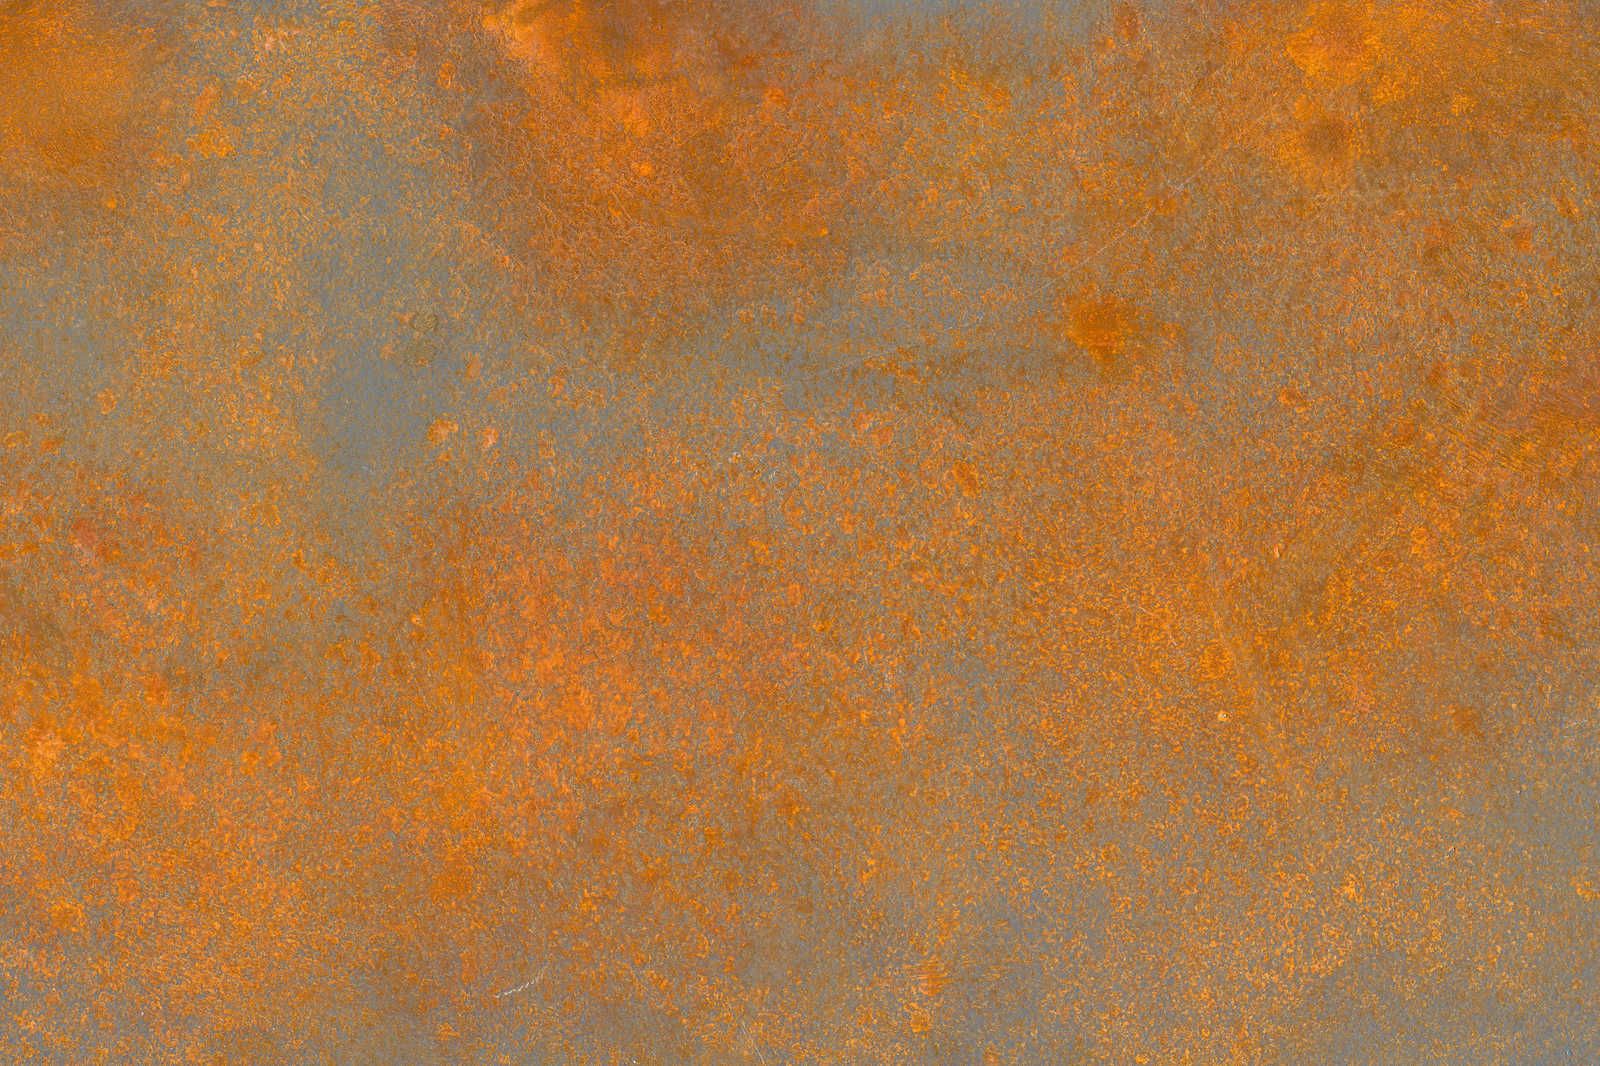             Rostoptik Leinwandbild Orange Braun mit Used Look – 0,90 m x 0,60 m
        